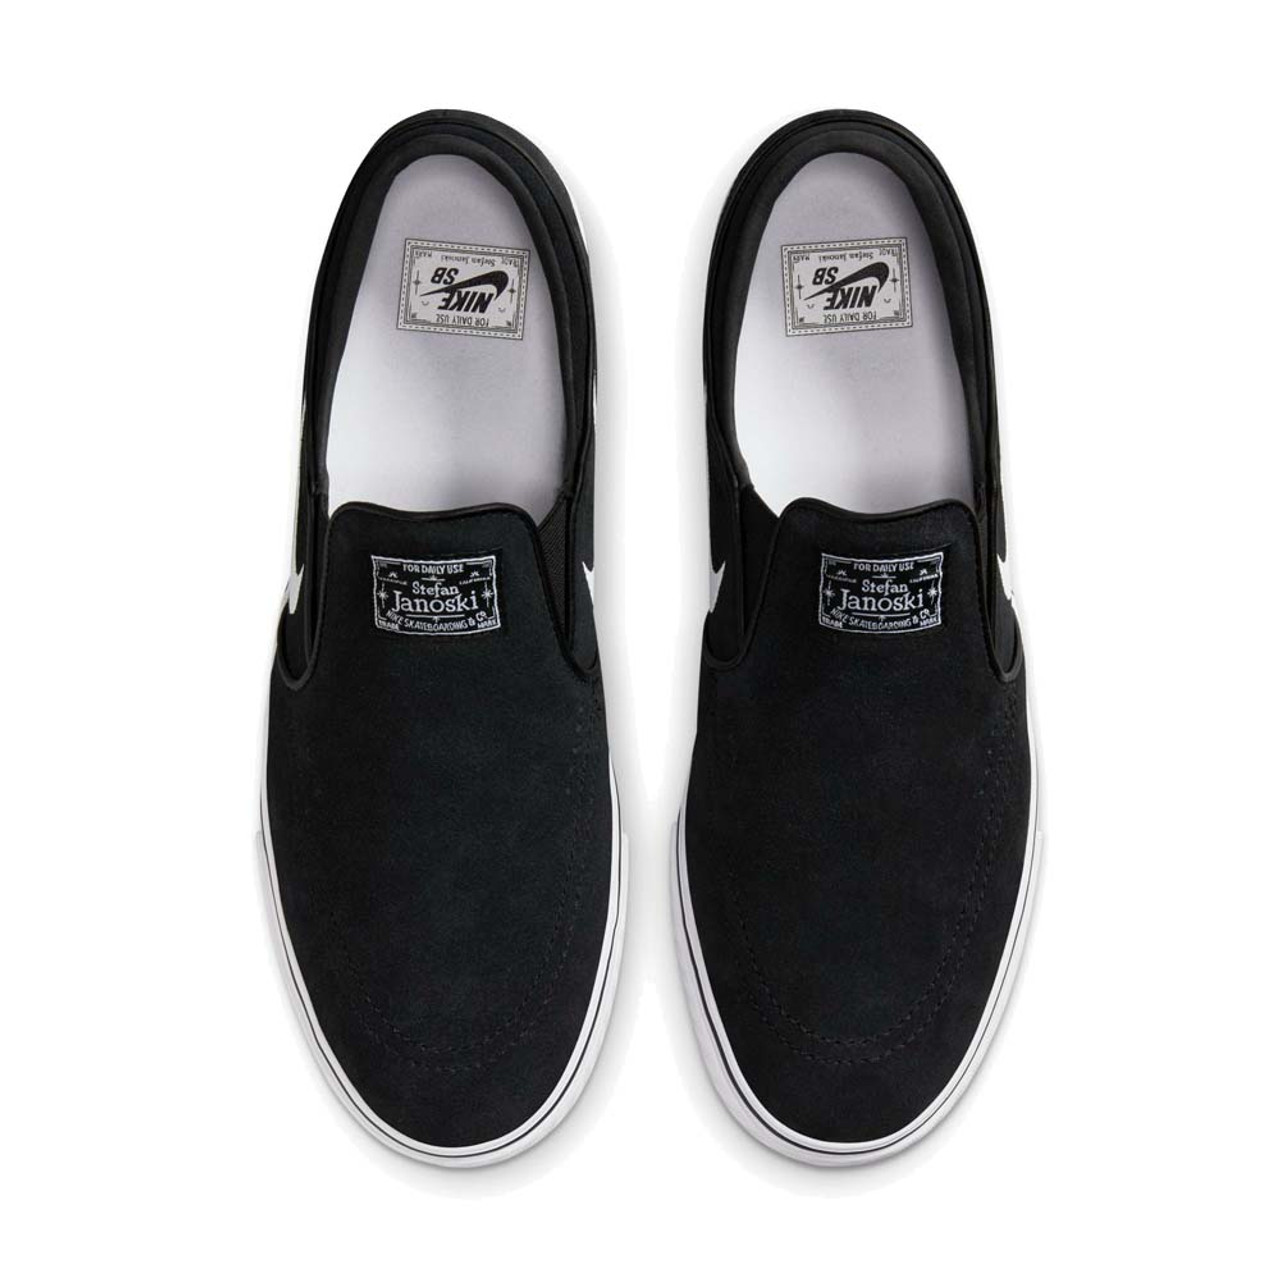 NIKE SB Janoski+ Slip Shoes Black/White-Black